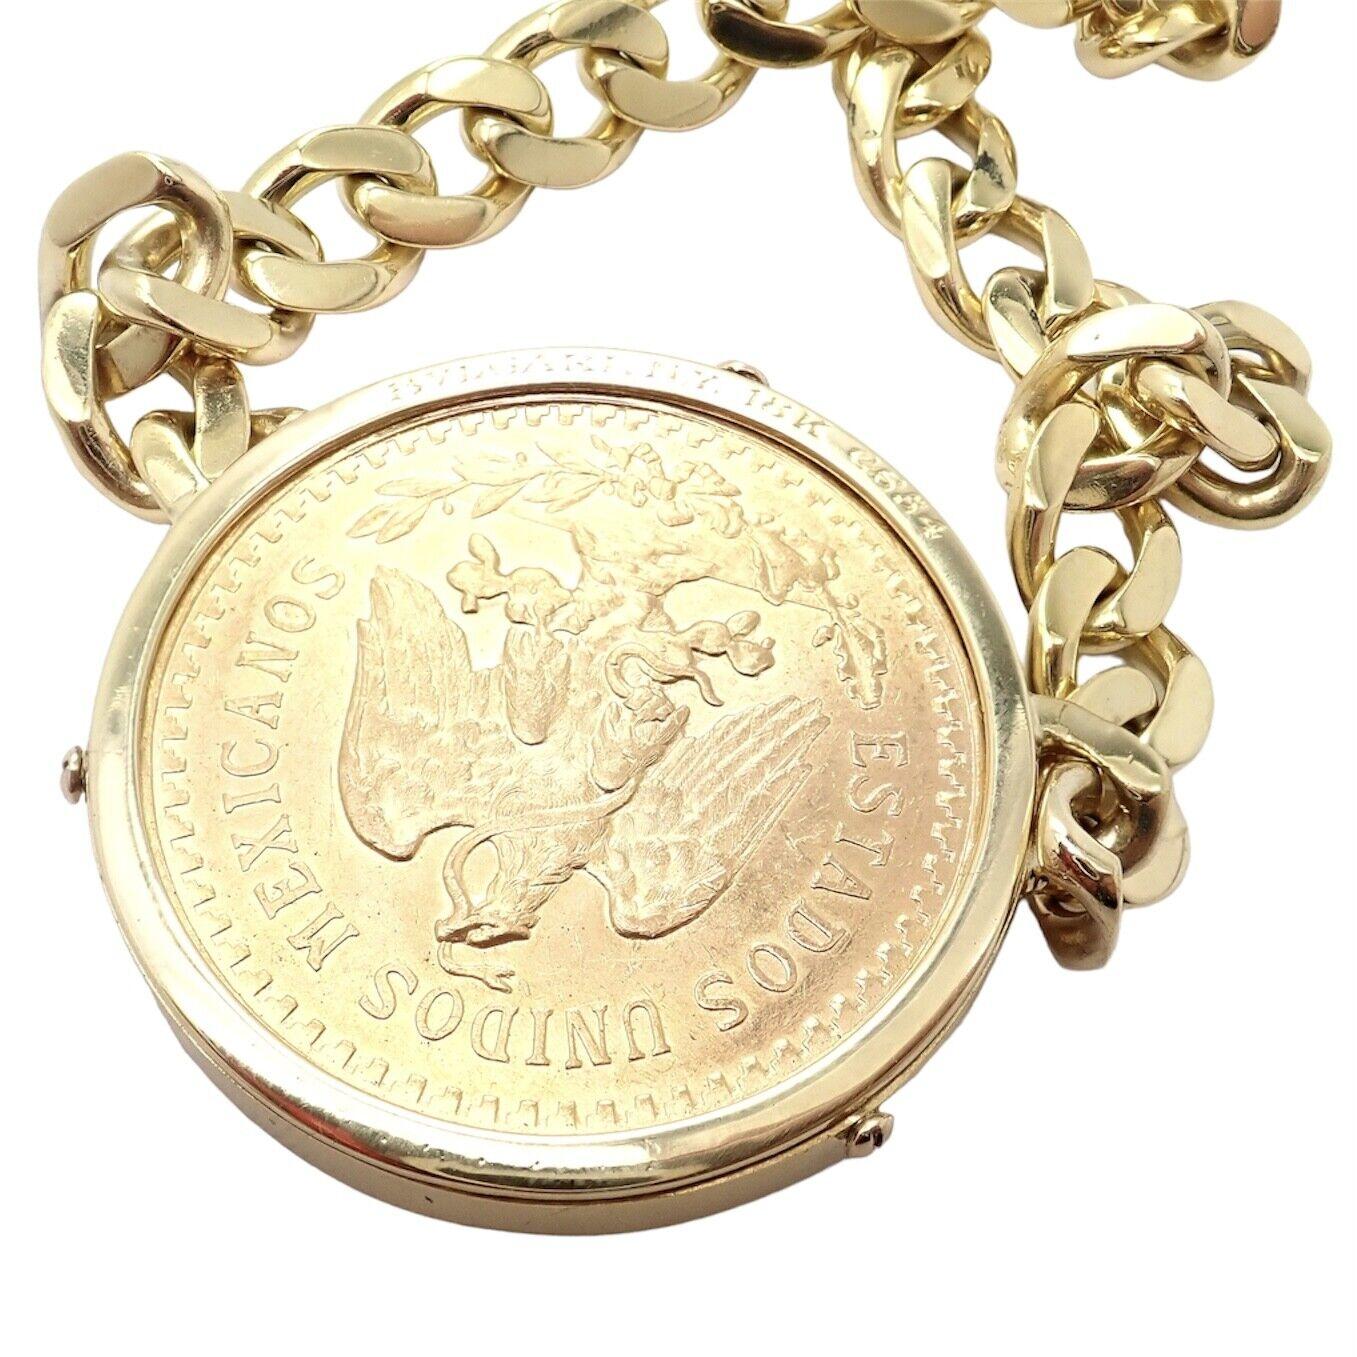 centenario gold chain